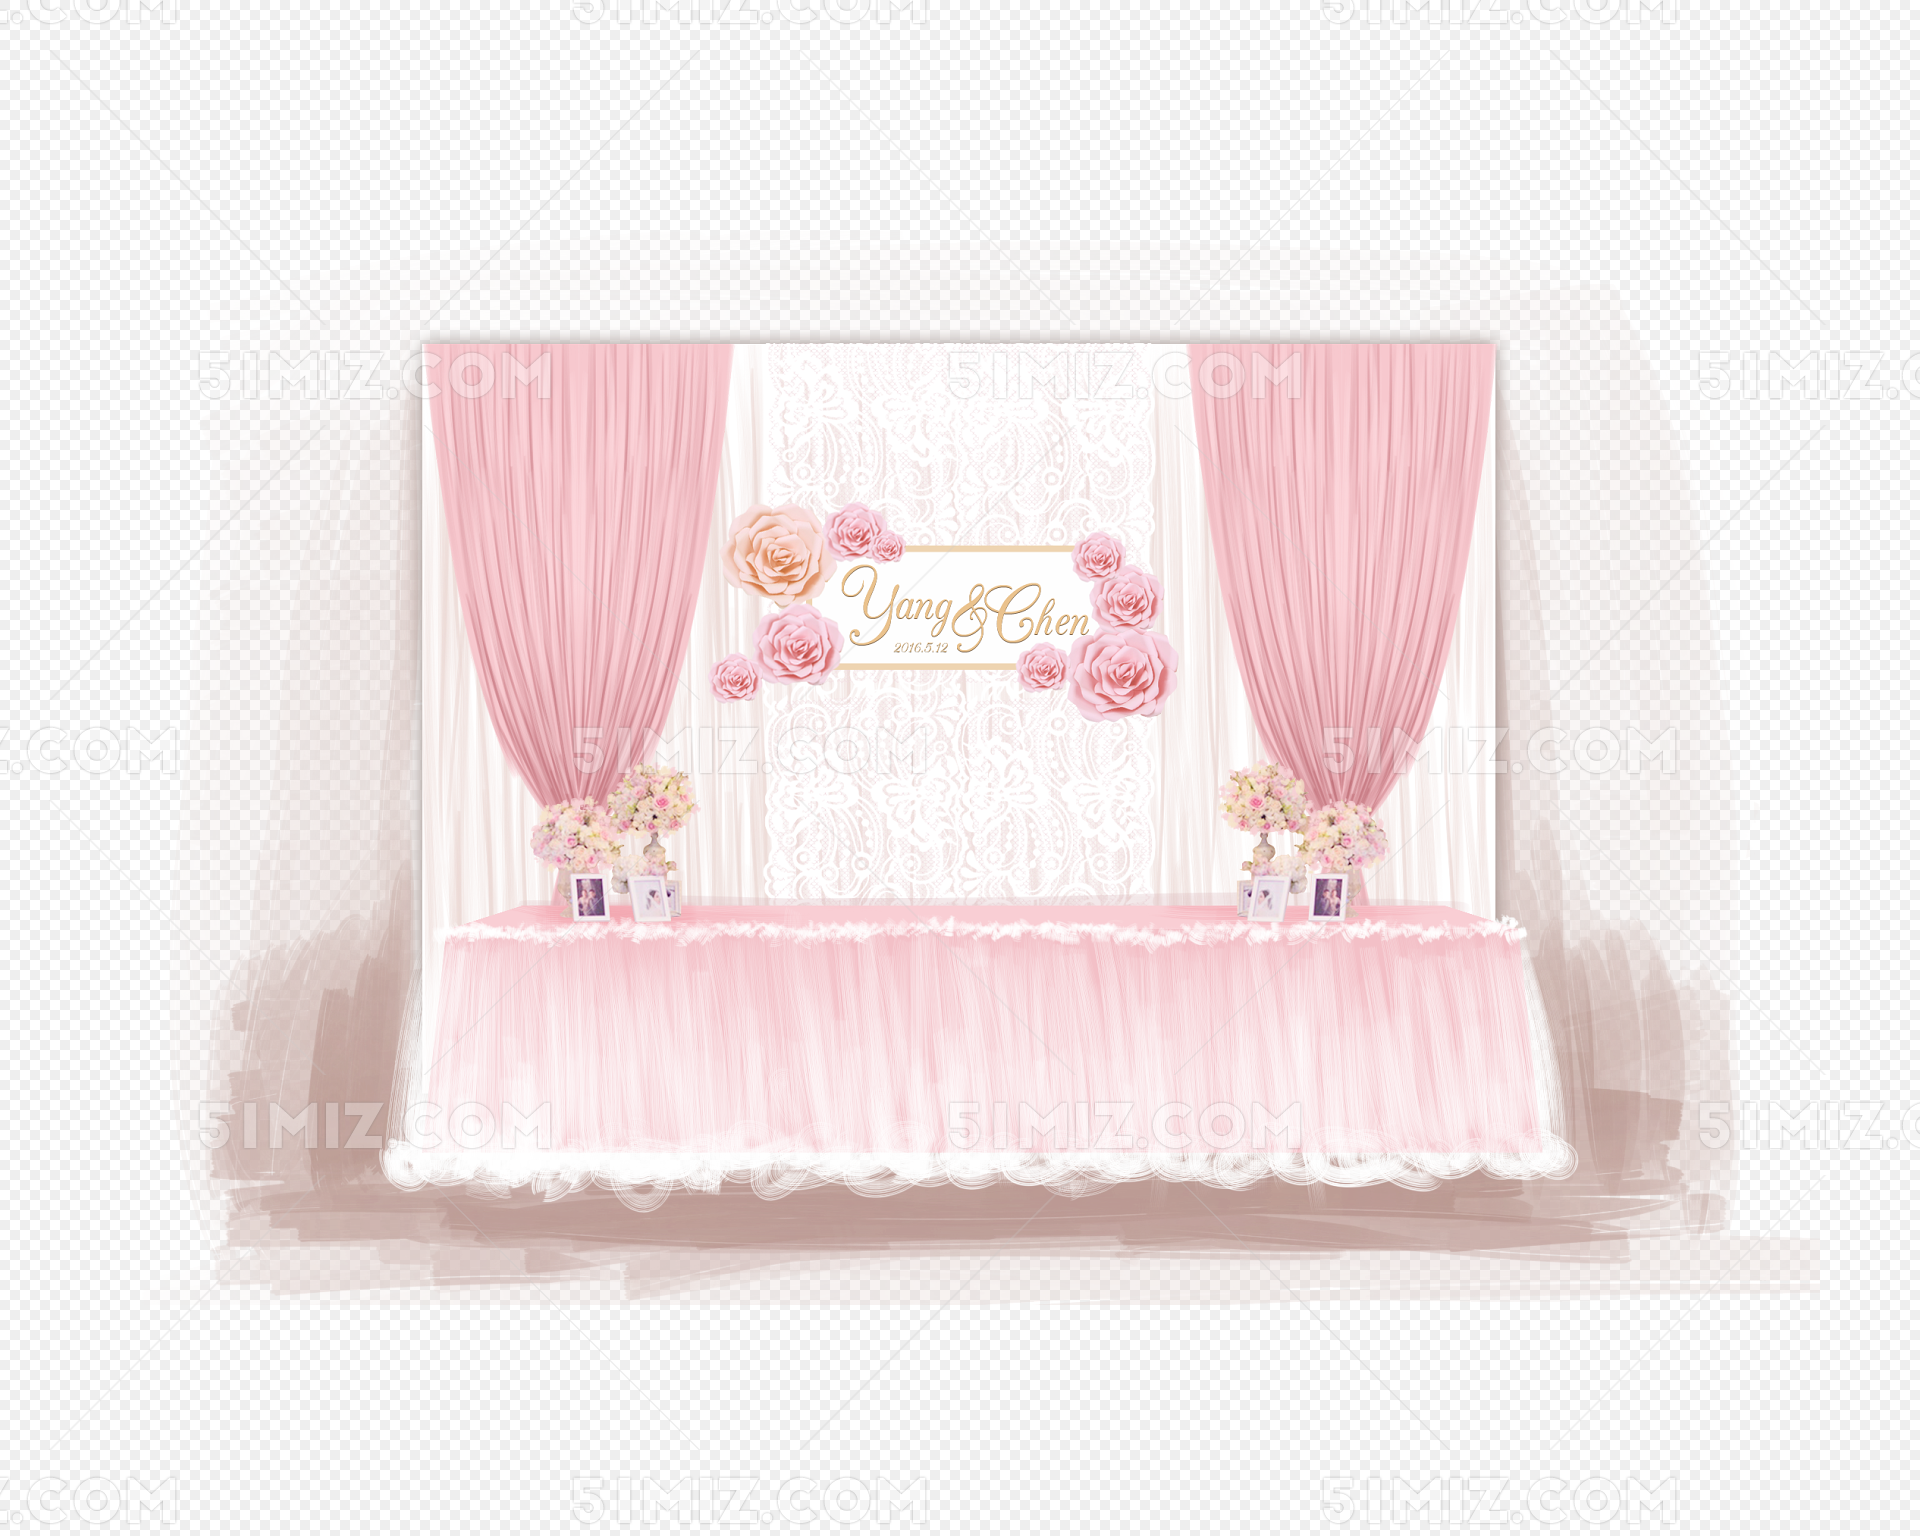 A-18粉色樱花主题婚礼效果图设计图__背景素材_PSD分层素材_设计图库_昵图网nipic.com